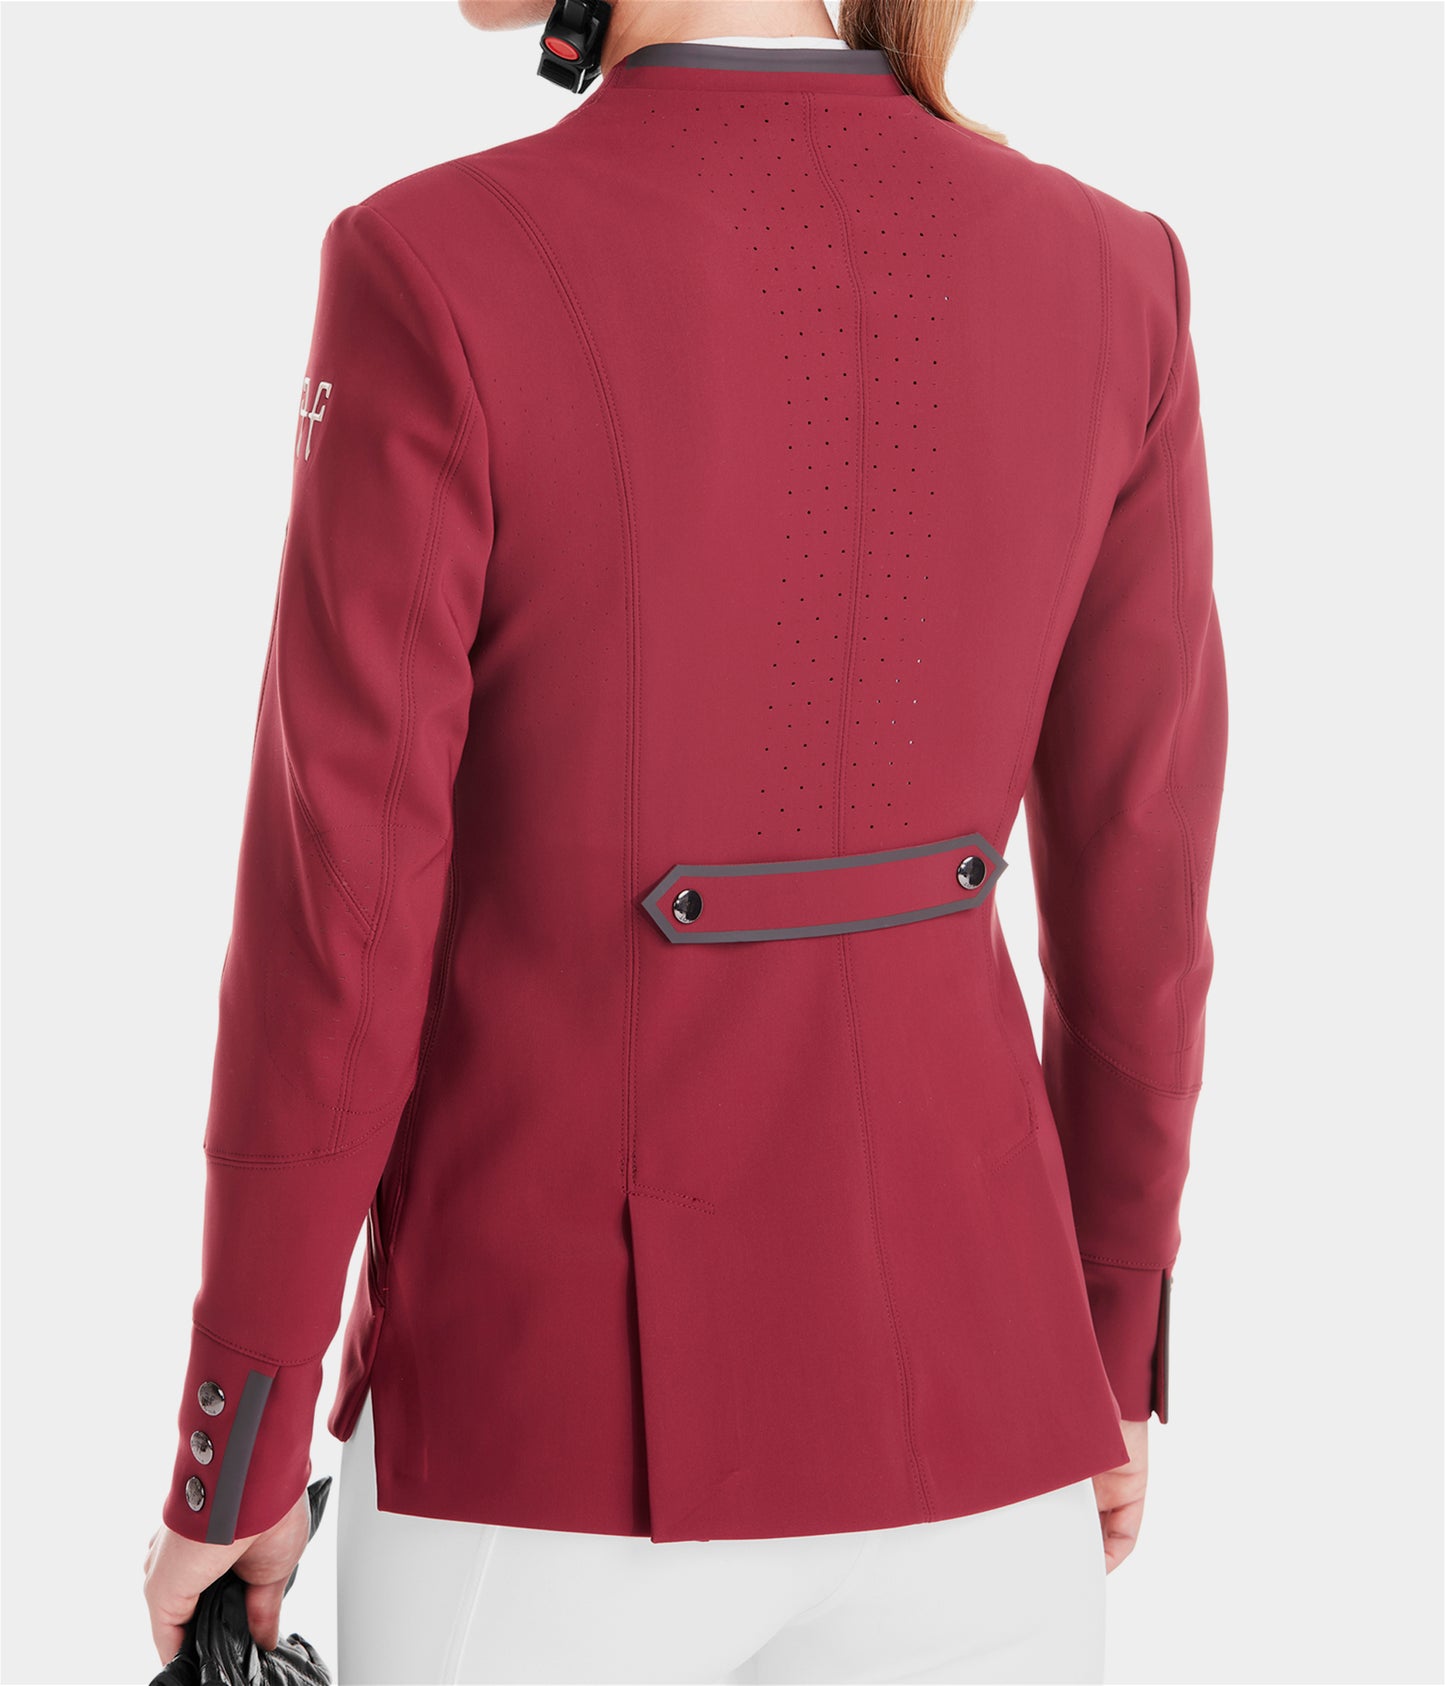 New AEROTECH Jacket | Dark Red